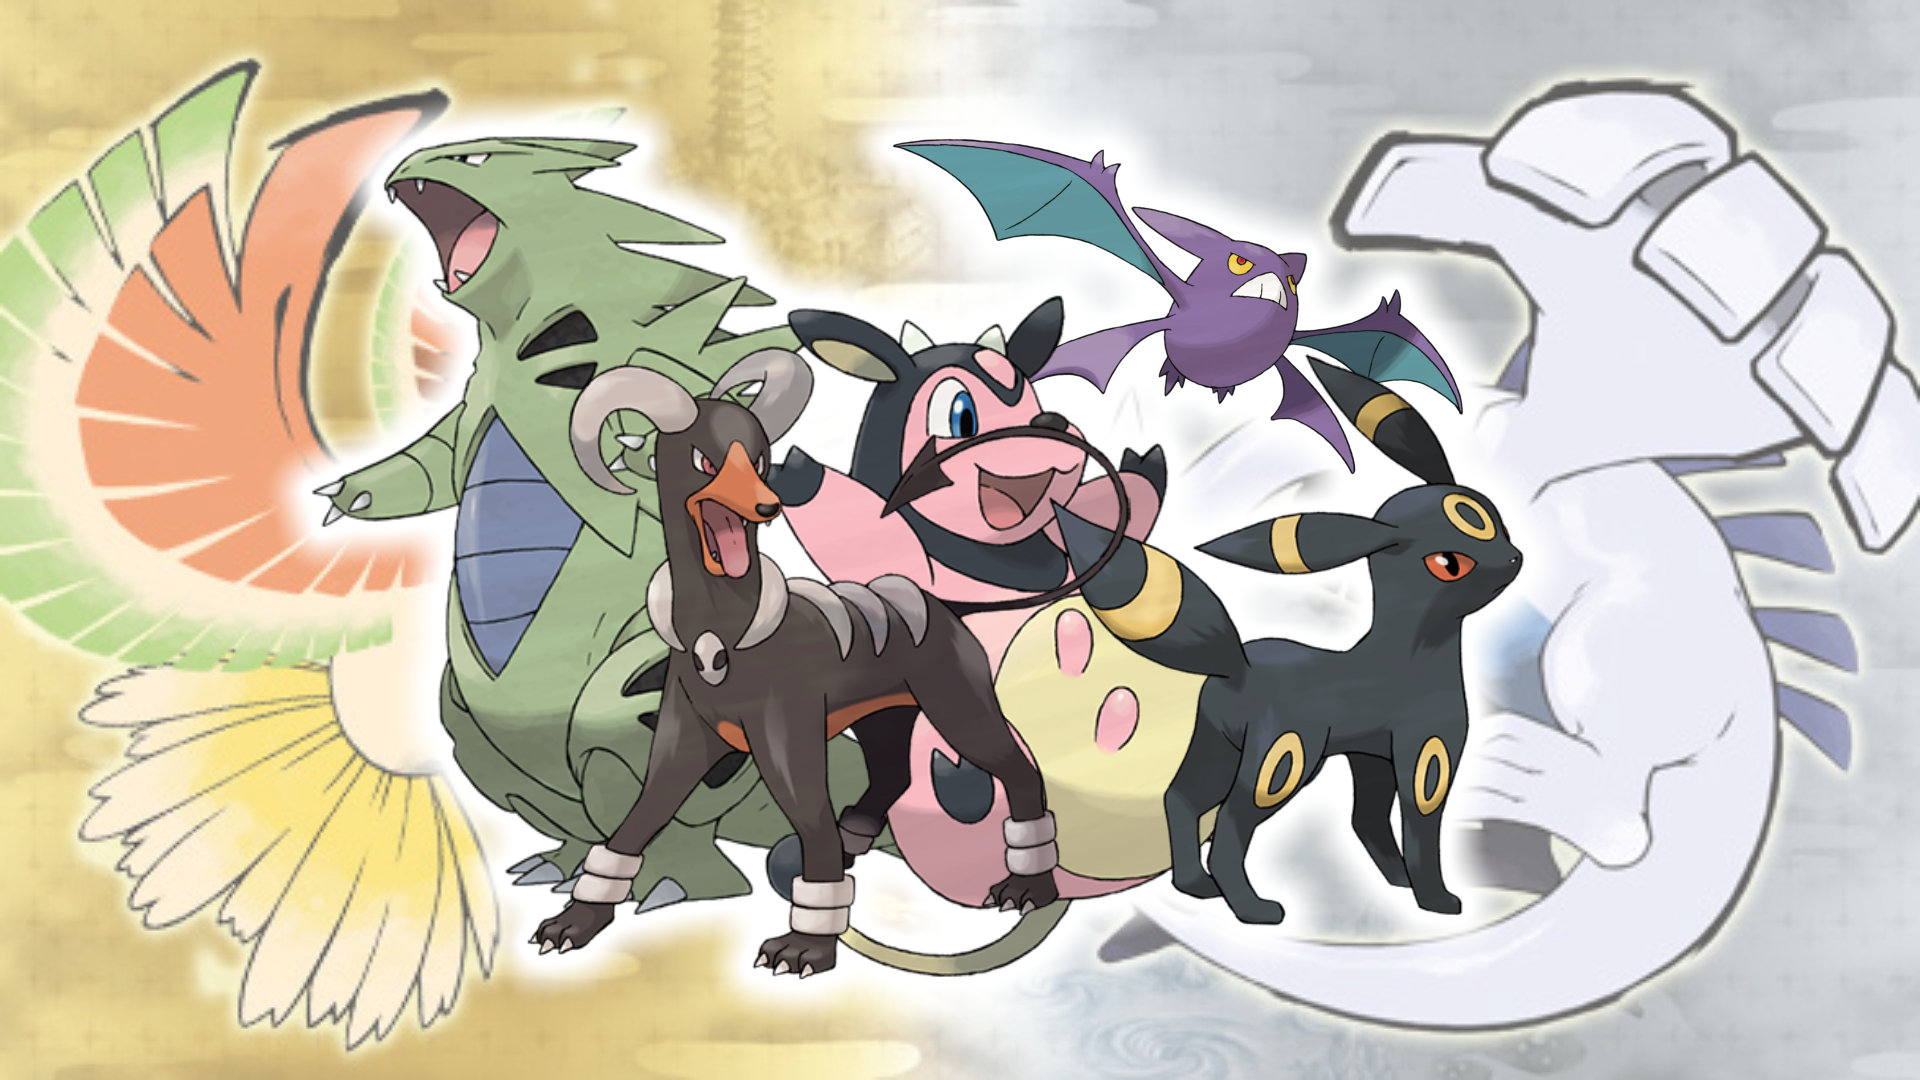 Pokémon Go Gen 8 Pokemon list released so far, and every creature